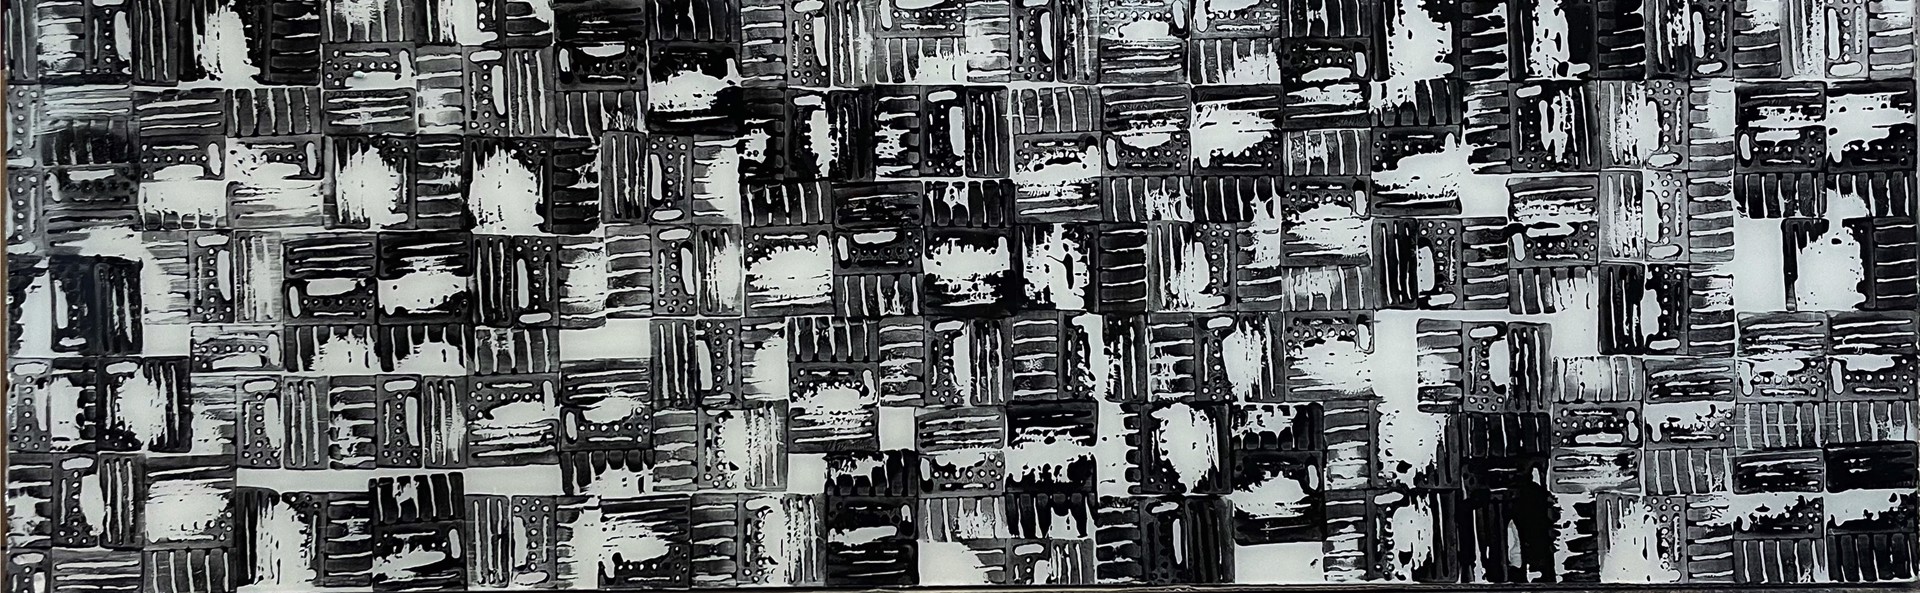 Domino Effect by Trent Davis